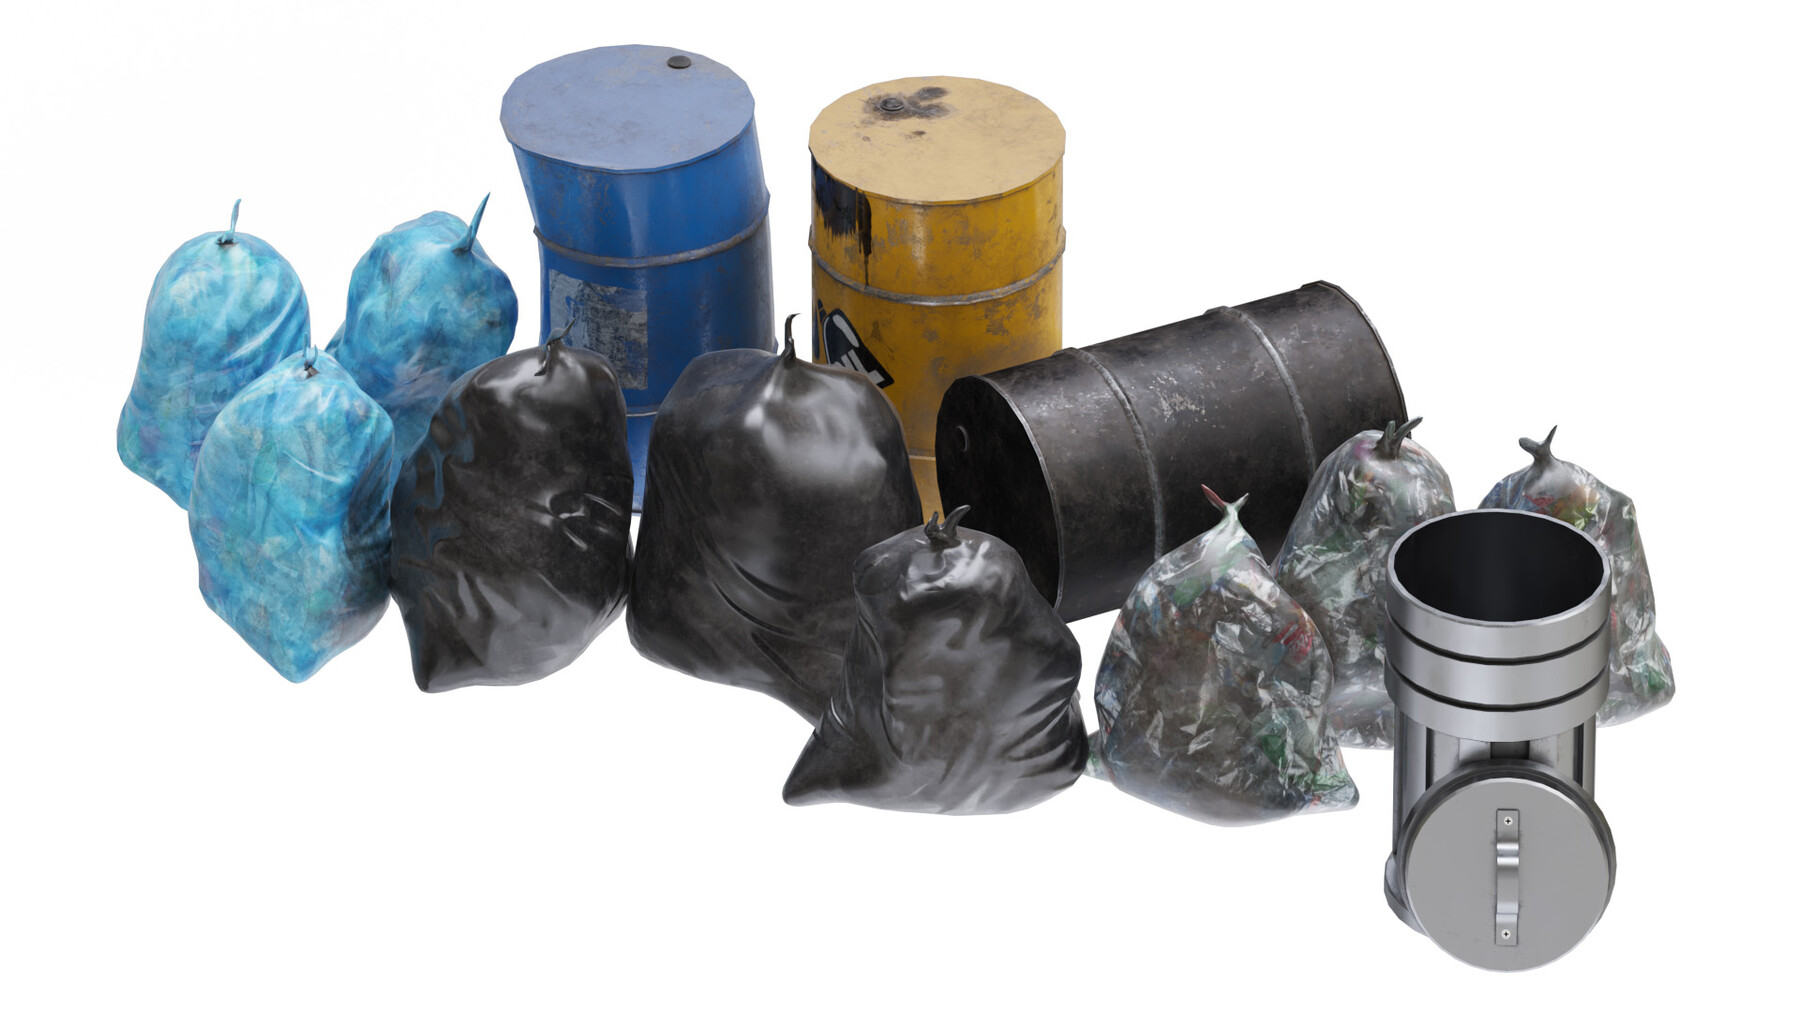 ArtStation - Street garbage bags set for